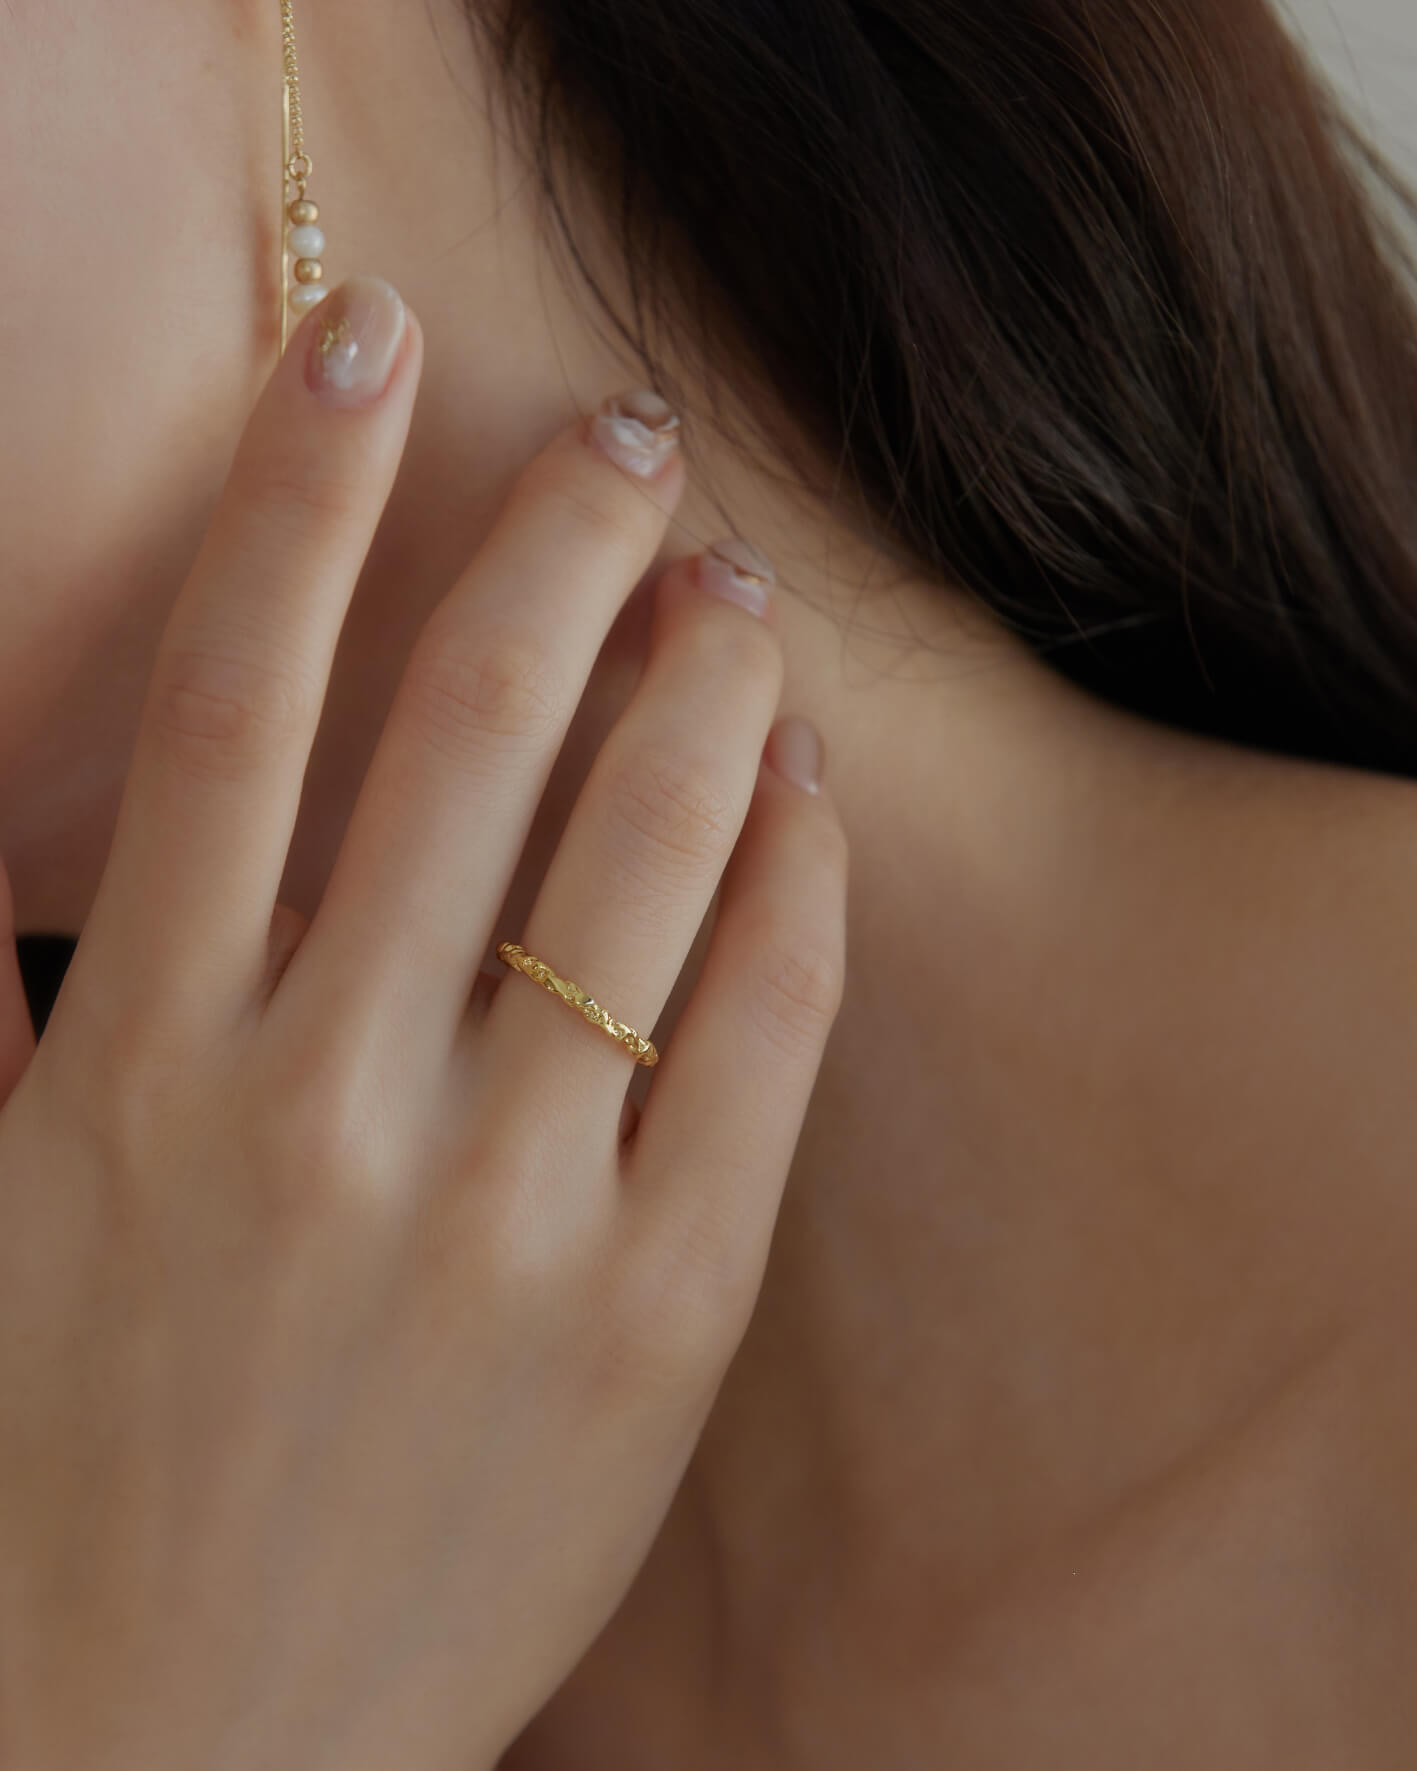 Eco安珂,韓國飾品,韓國戒指,韓國925純銀戒指,925純銀戒指,純銀戒指,純銀金戒指